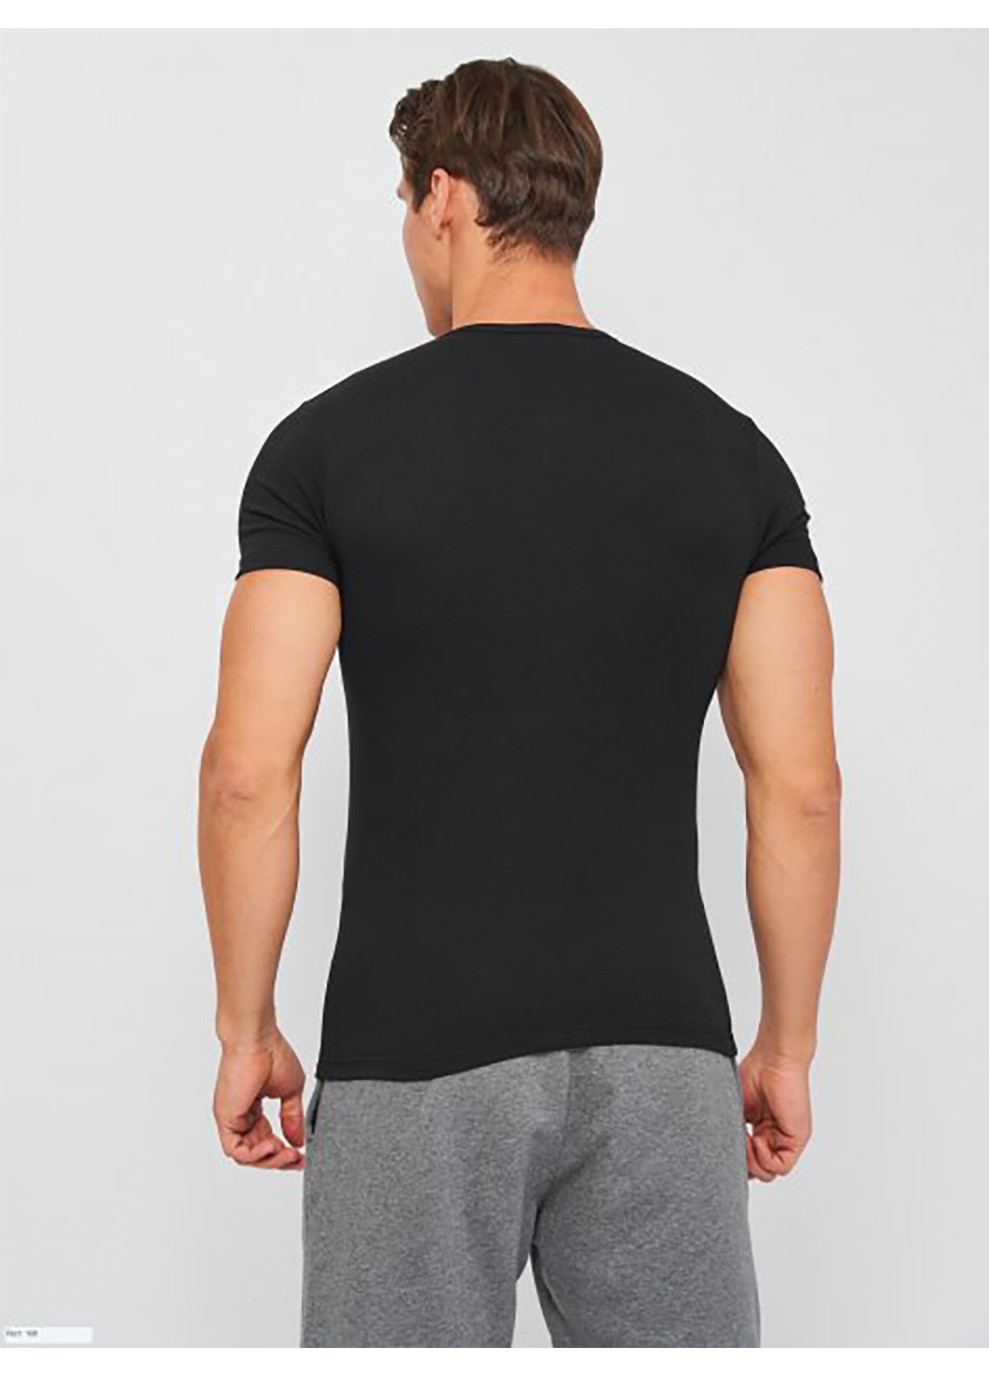 Черная футболка t-shirt mezza manica girocollo черный m муж k1305 nero-m Kappa